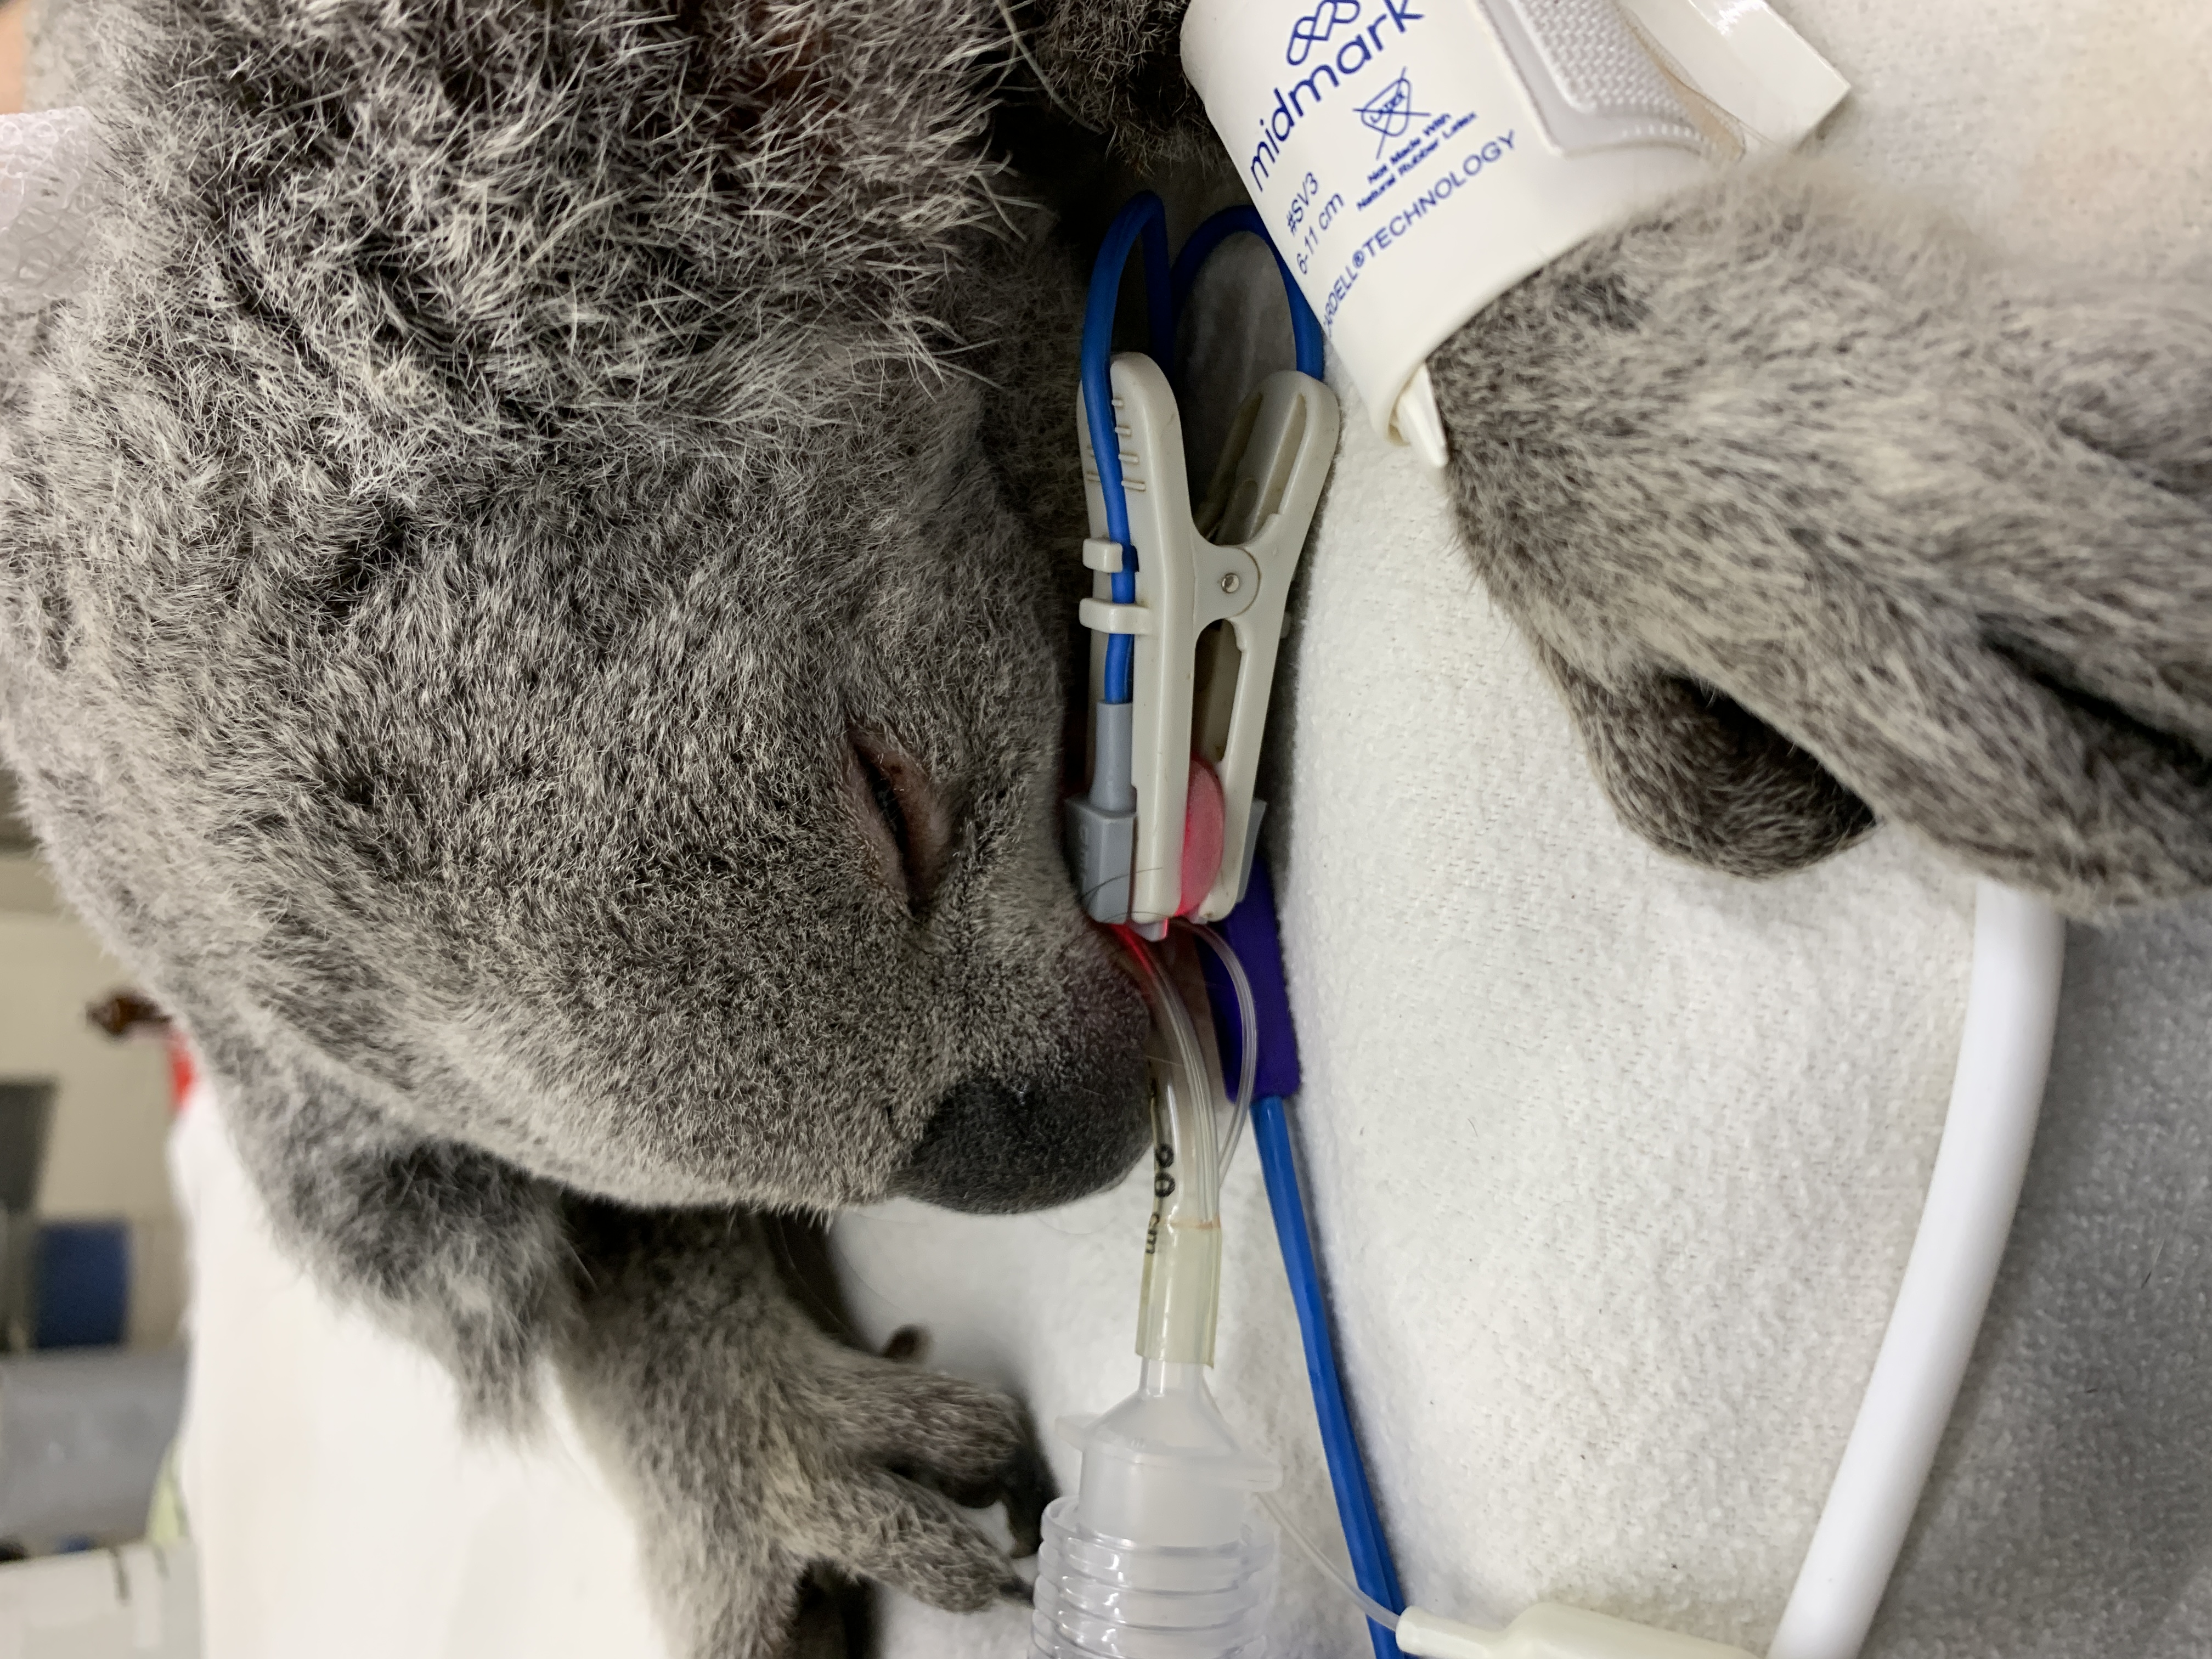 A koala receiving her preventative medicine examination